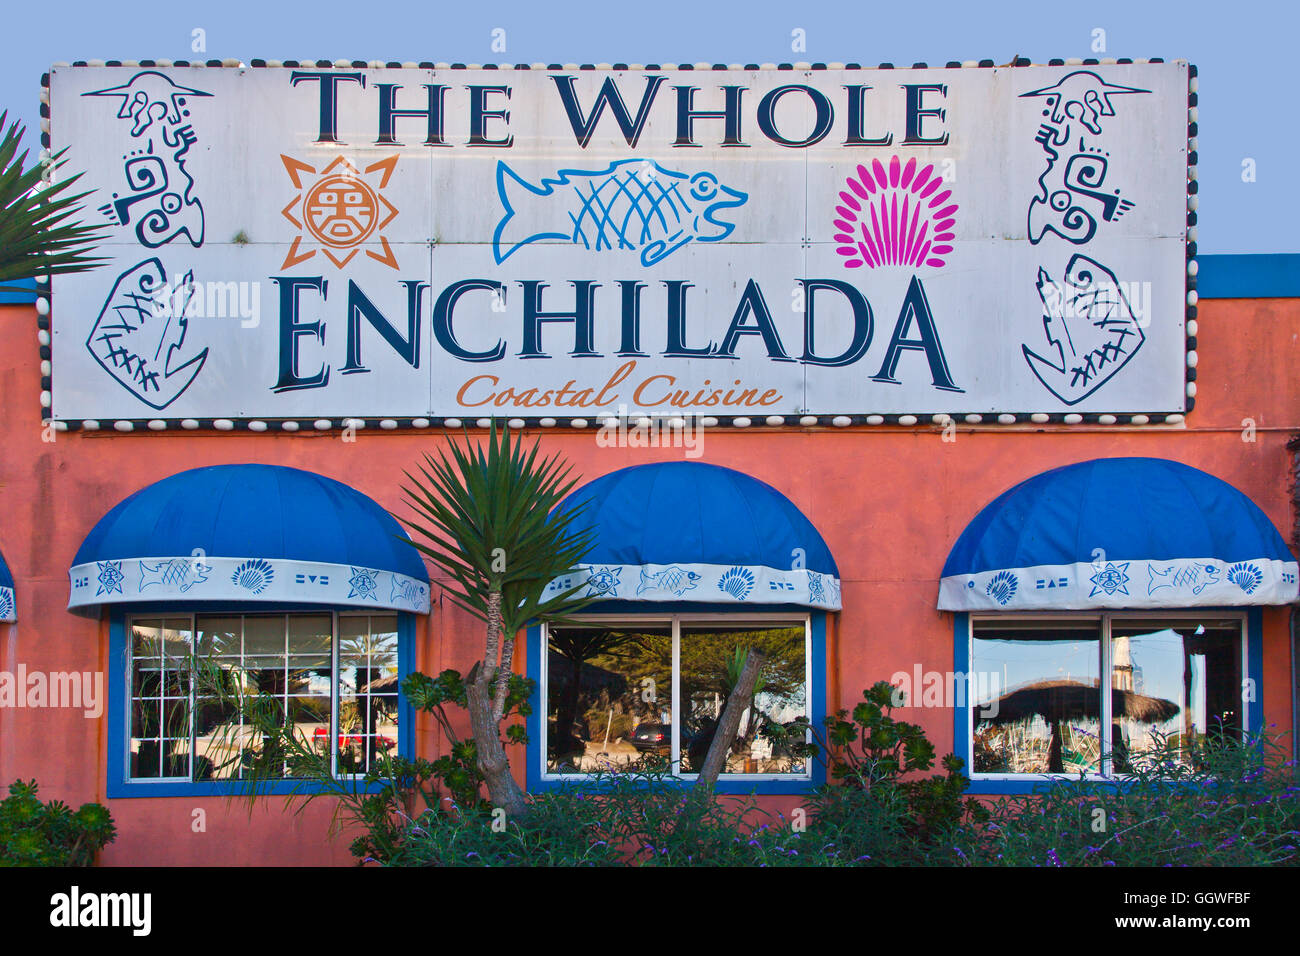 The WHOLE ENCHILADA MEXICAN restaurant along highway 1 - MOSS LANDING, CALIFORNIA Stock Photo